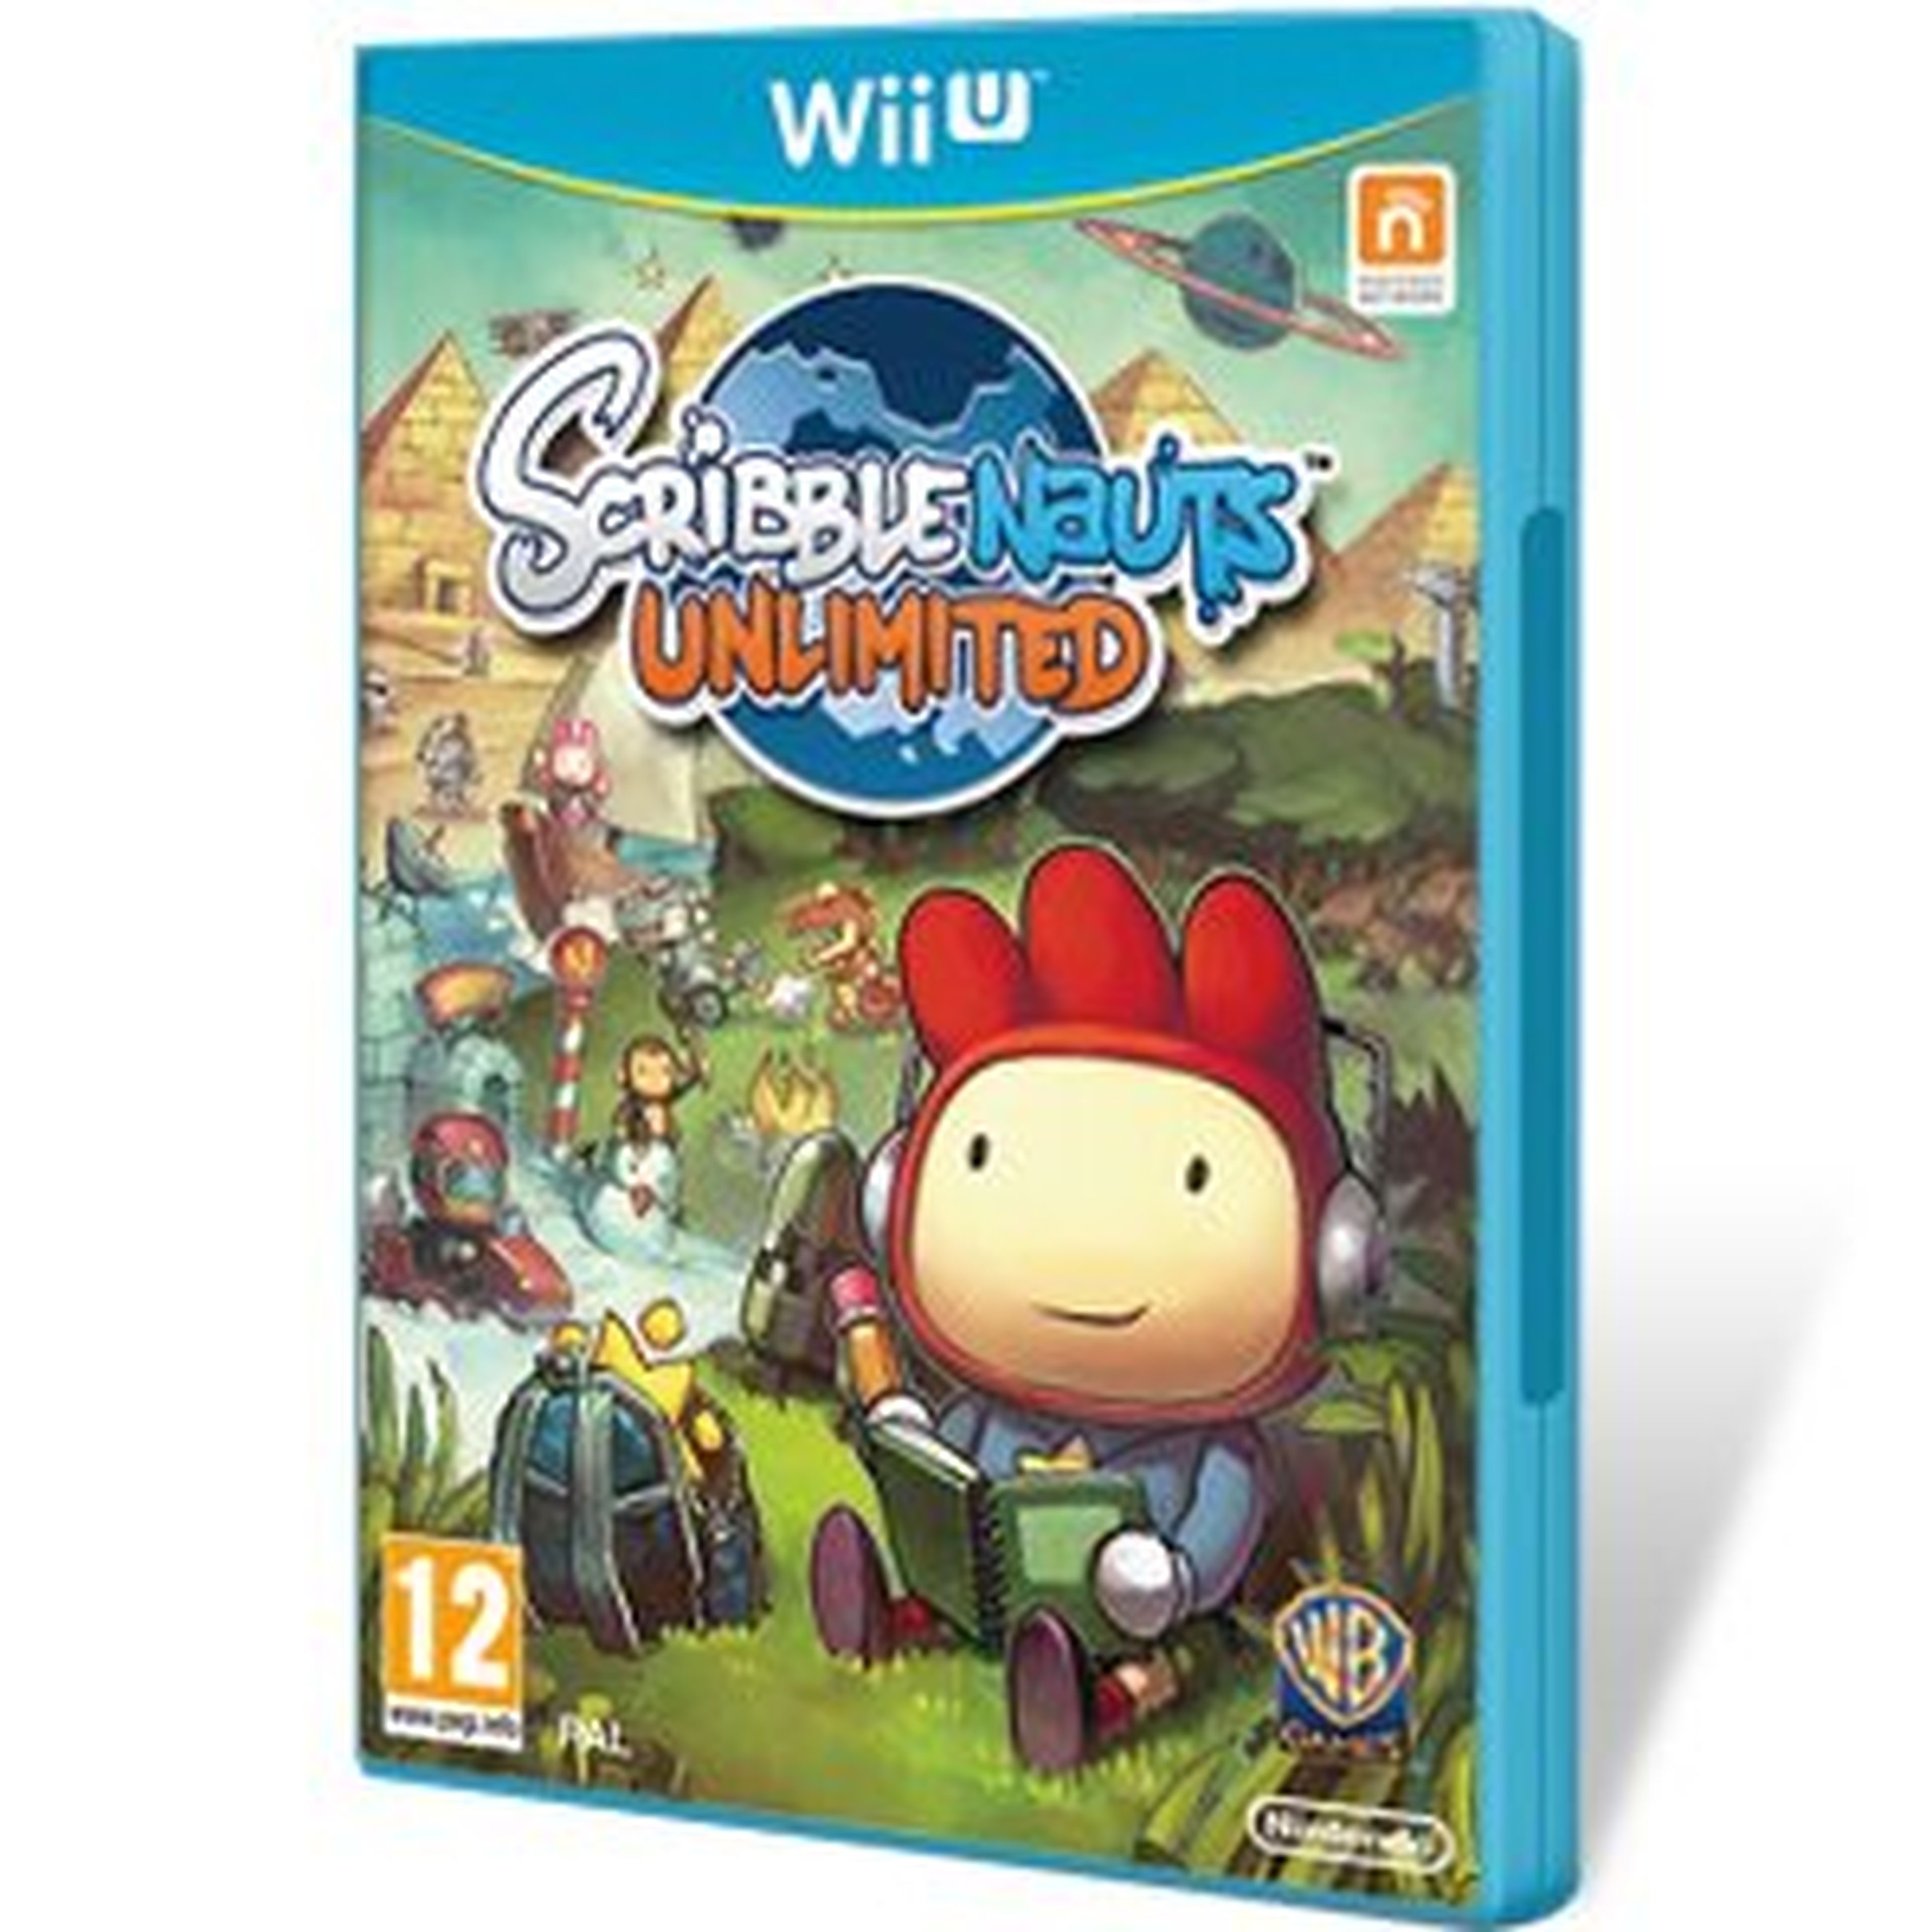 Scribblenauts Unlimited para Wii U